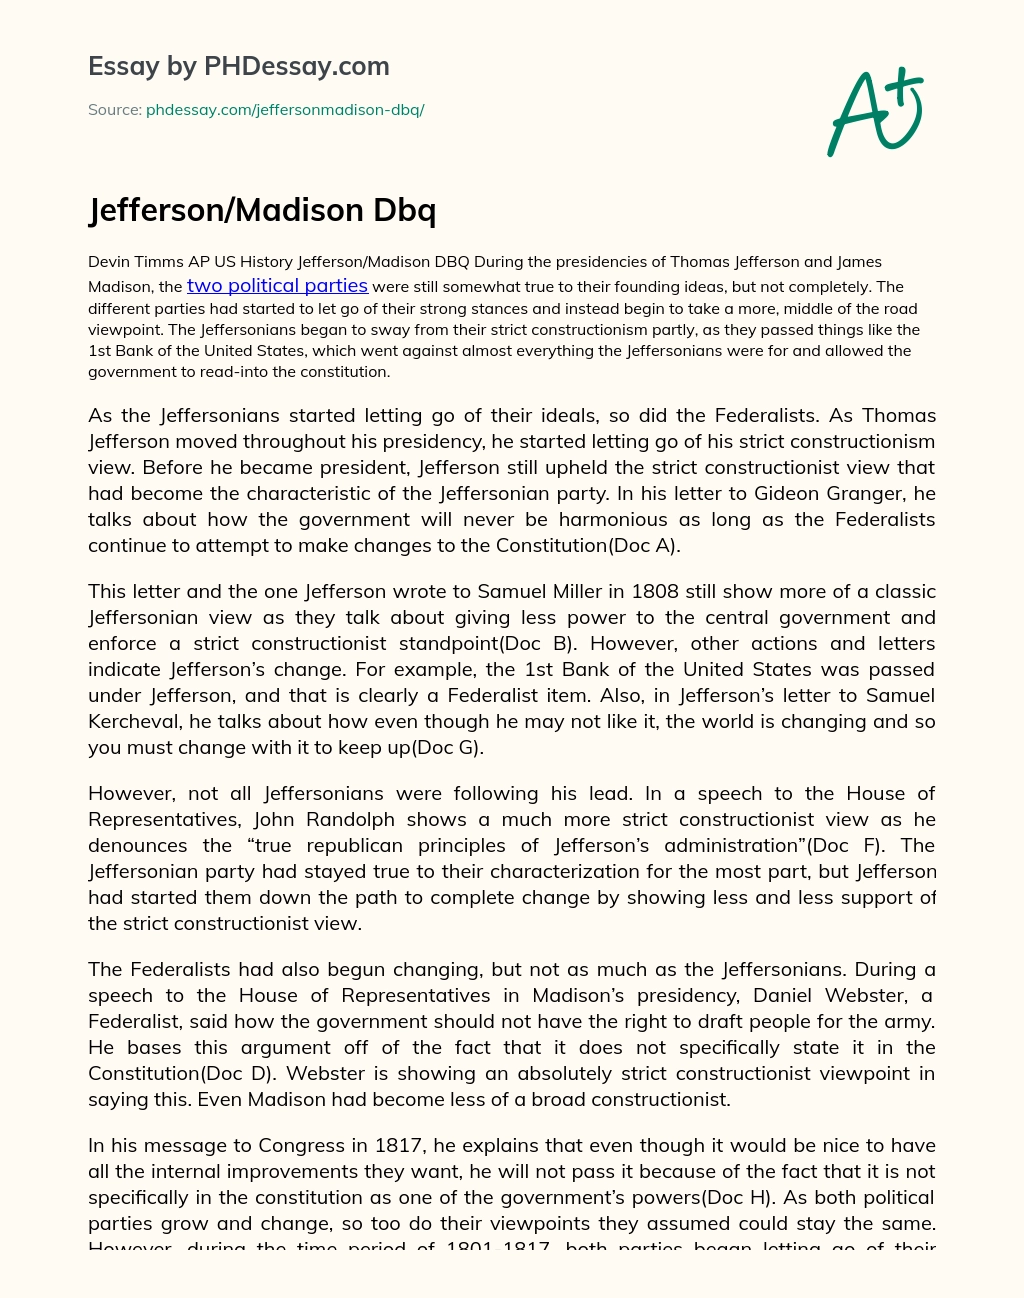 Jefferson/Madison Dbq essay